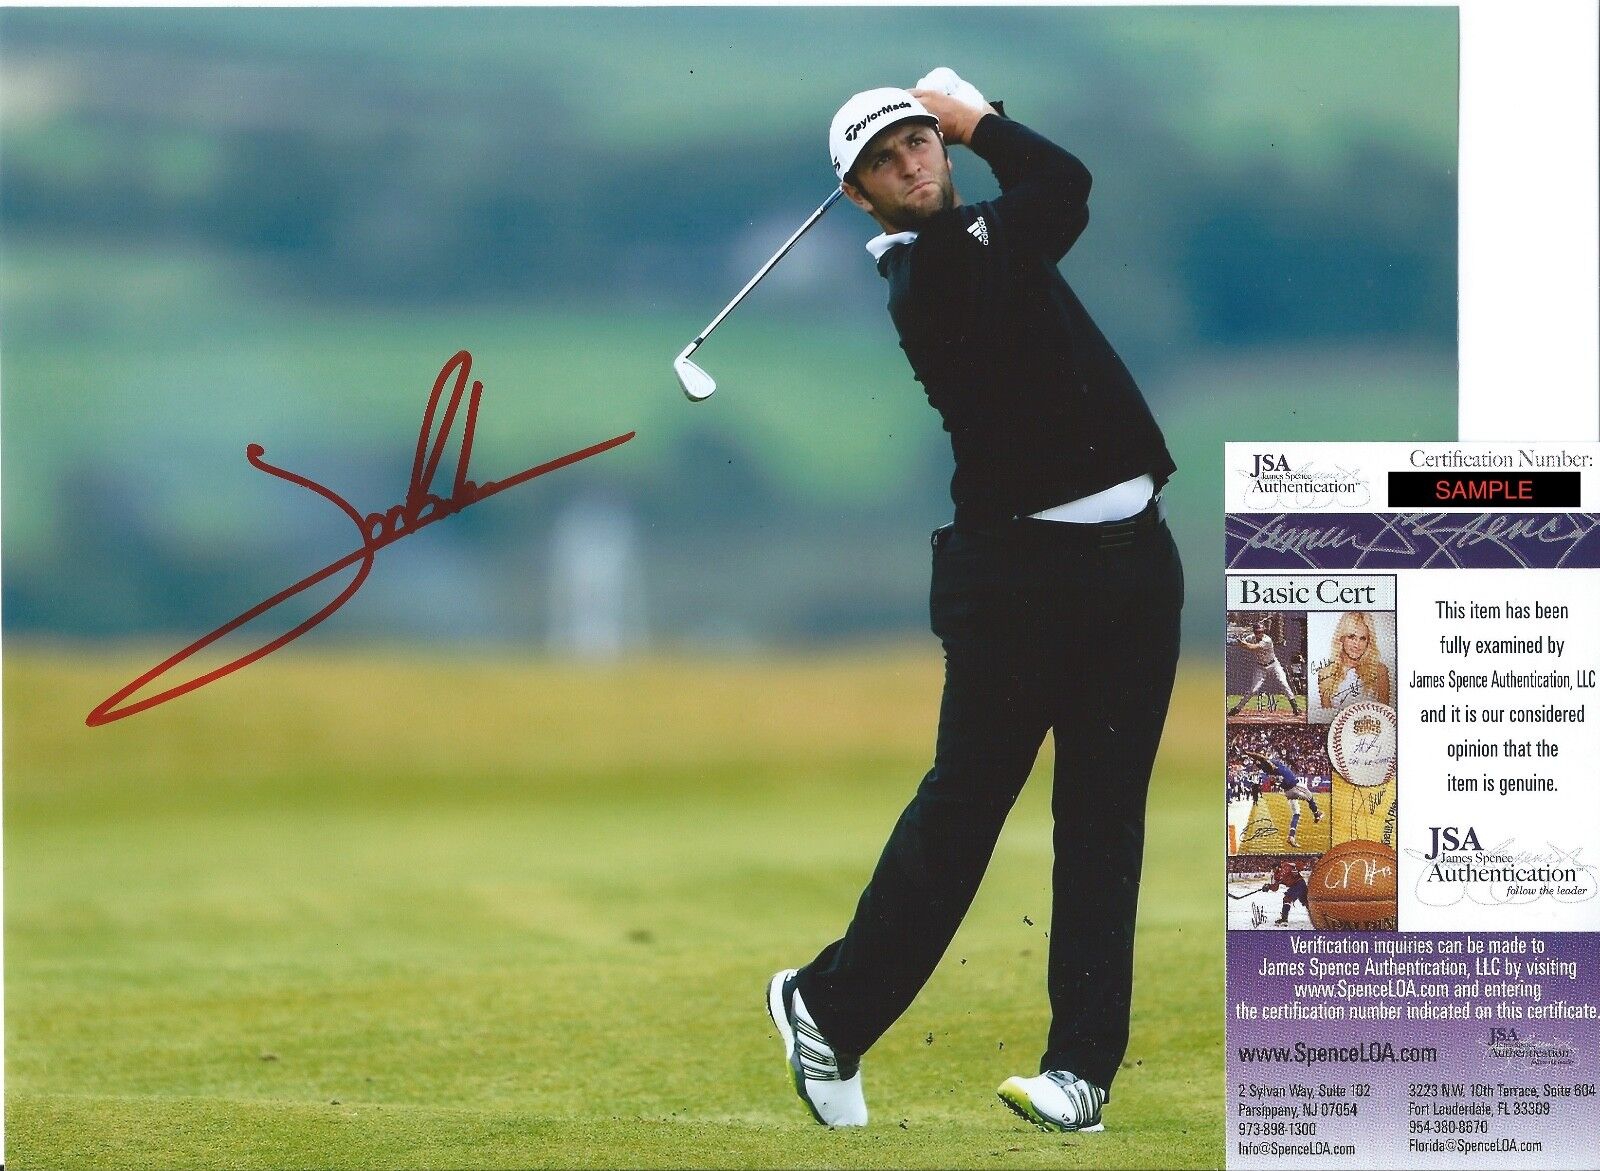 JON RAHM Signed Autographed 8x10 Photo Poster painting PGA Tour Golf Masters Open ASU JSA COA 1